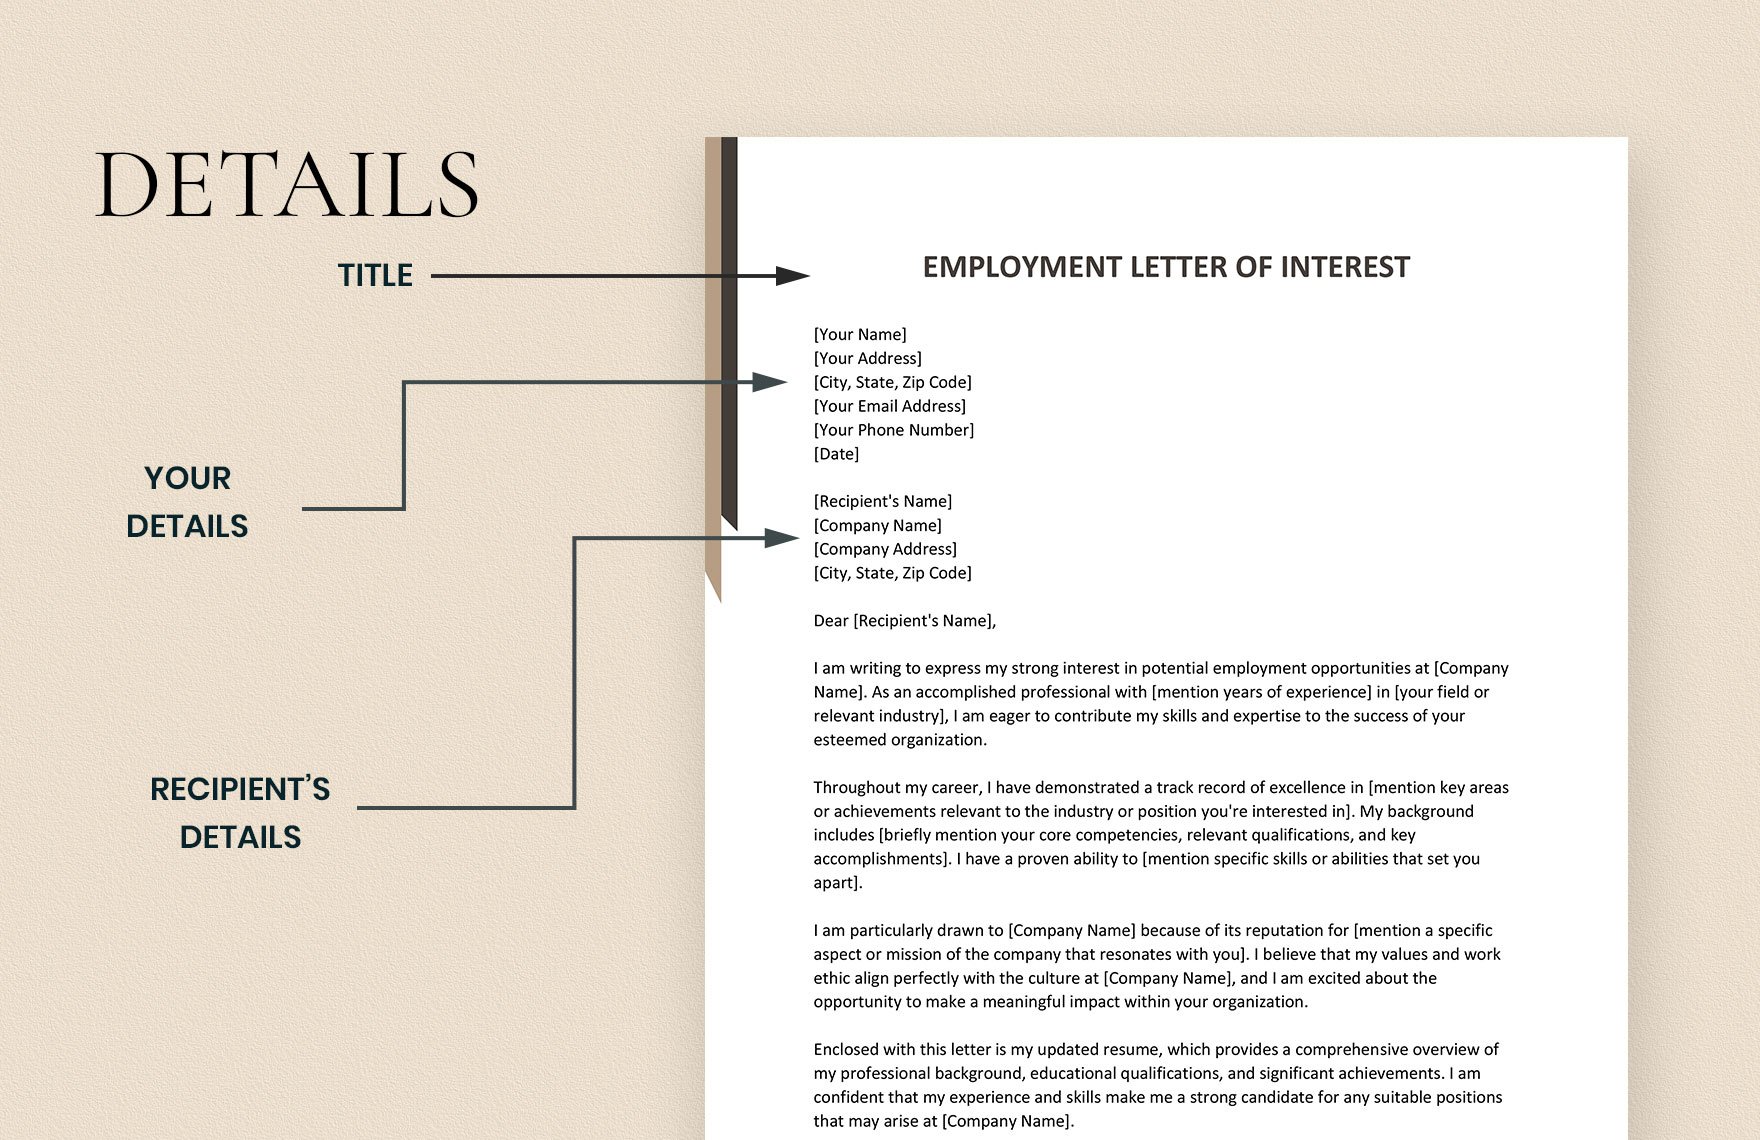 Employment Letter of Interest